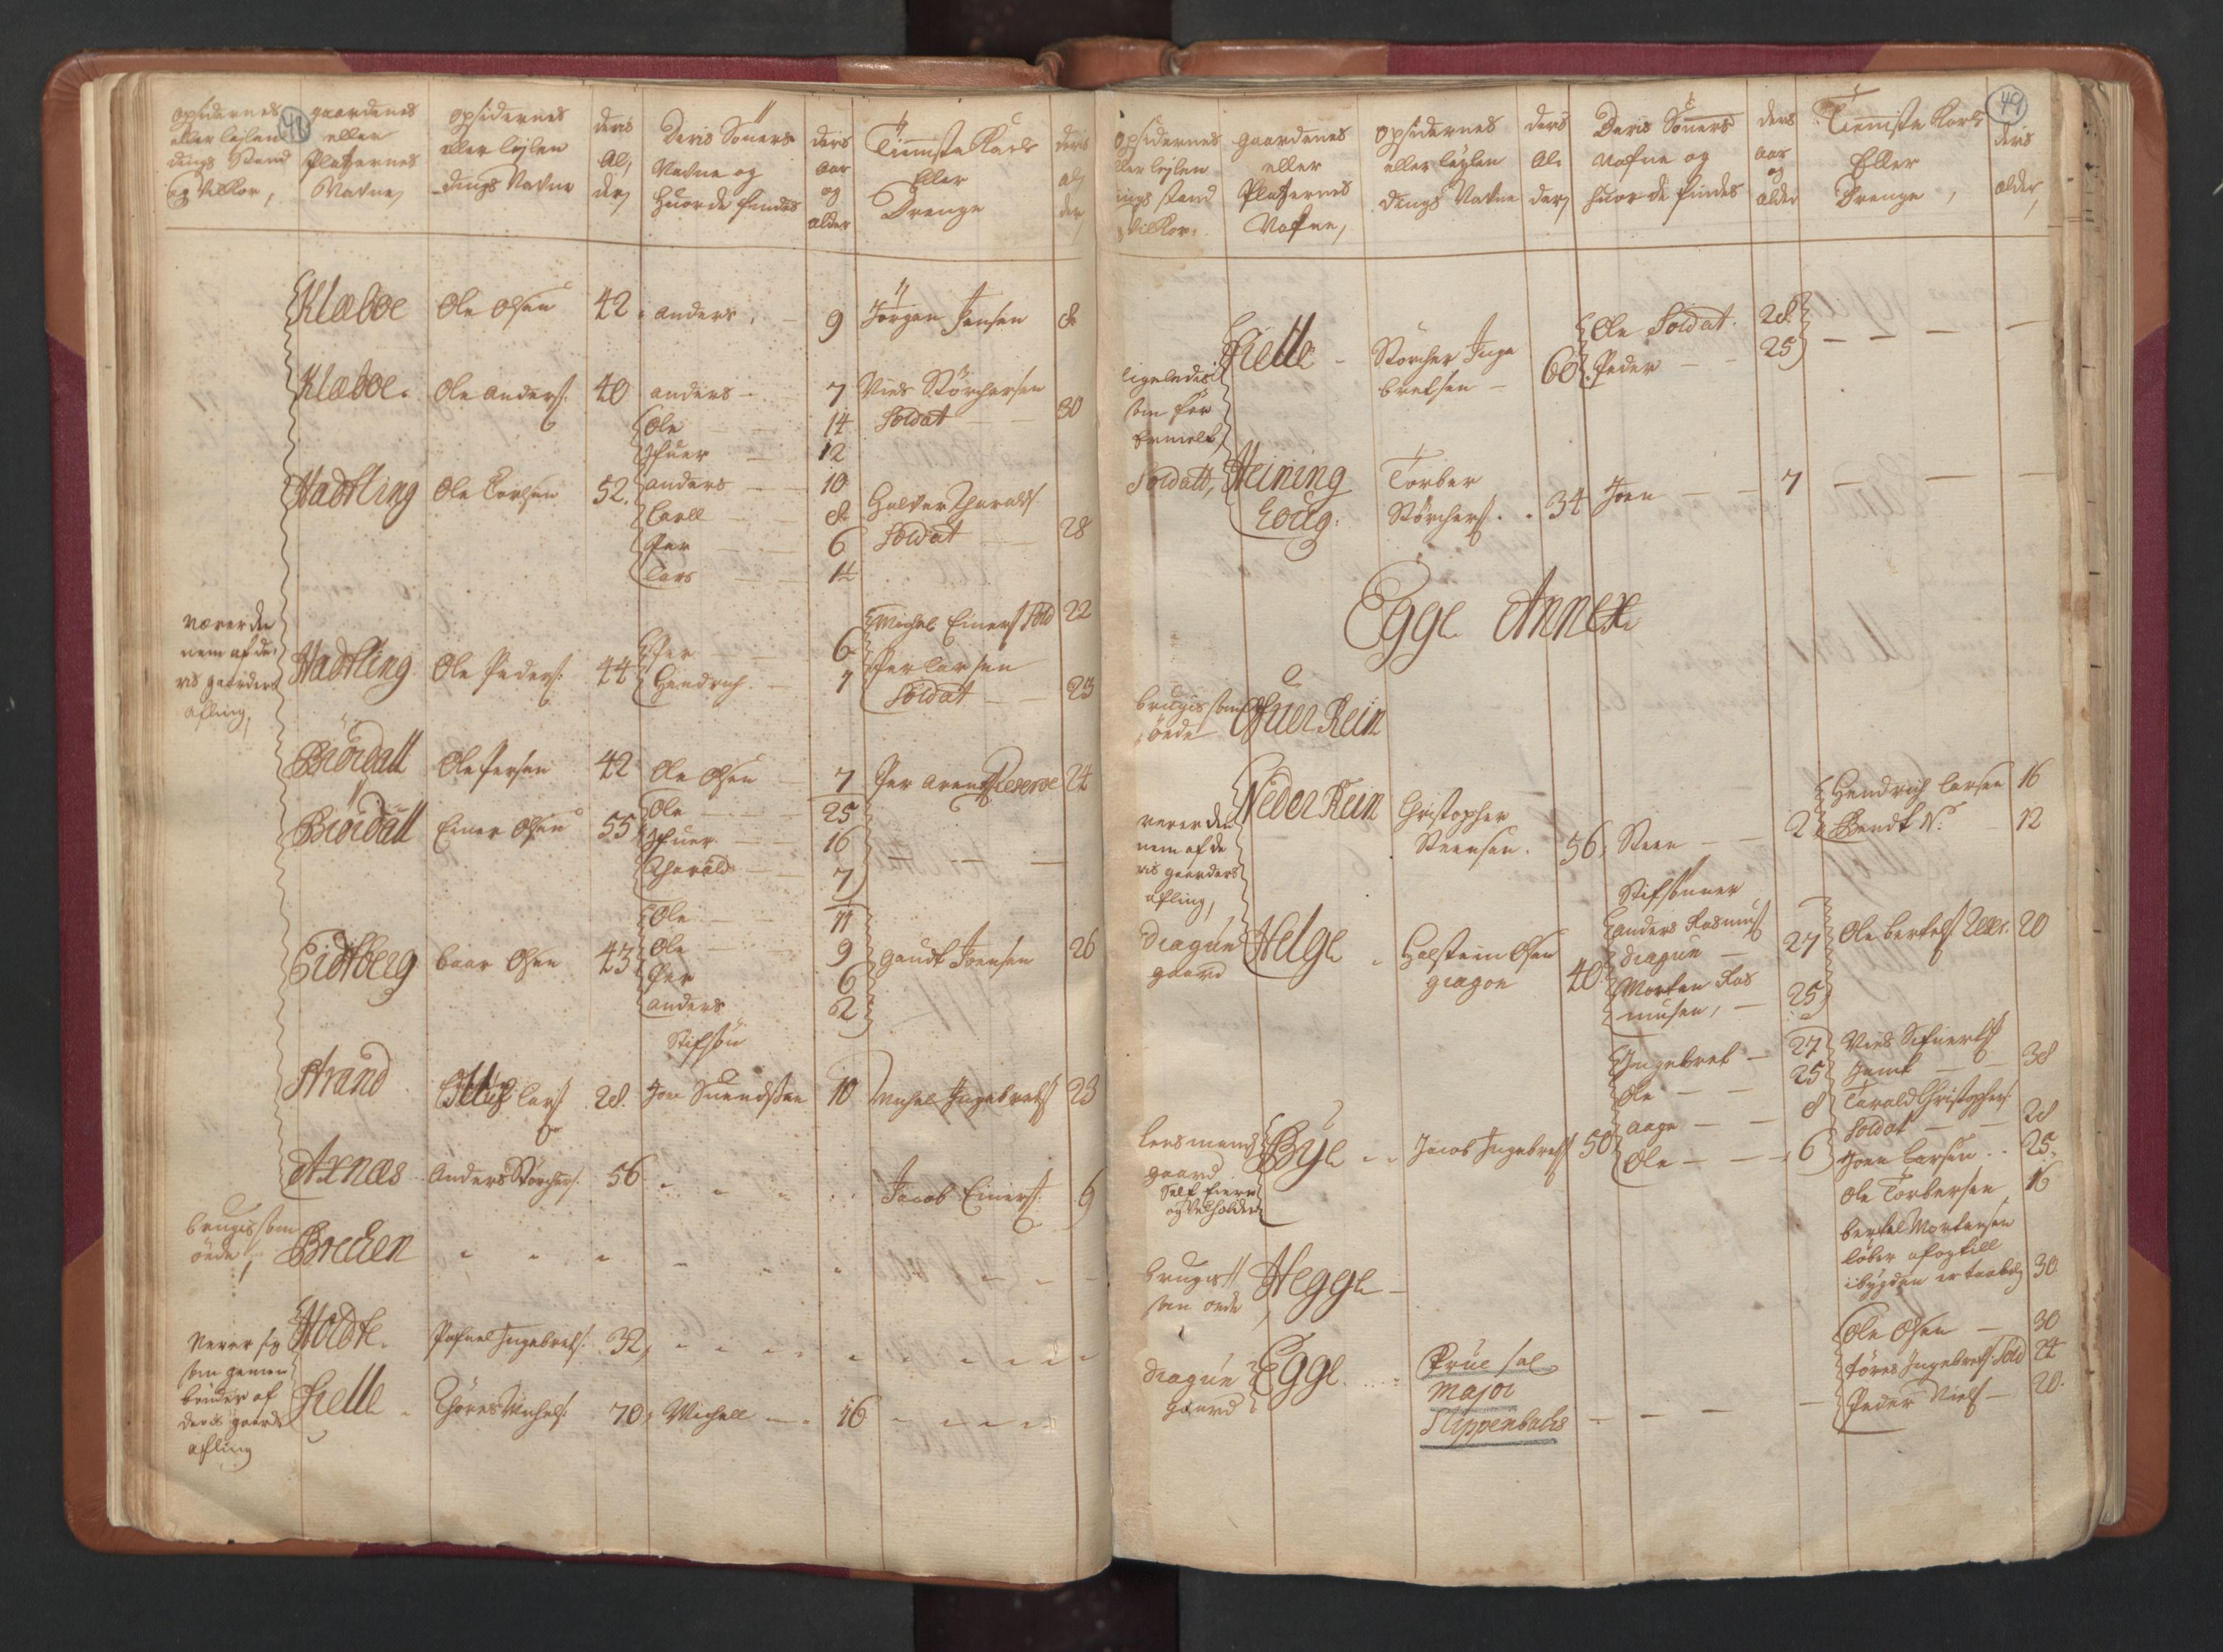 RA, Census (manntall) 1701, no. 15: Inderøy fogderi and Namdal fogderi, 1701, p. 48-49